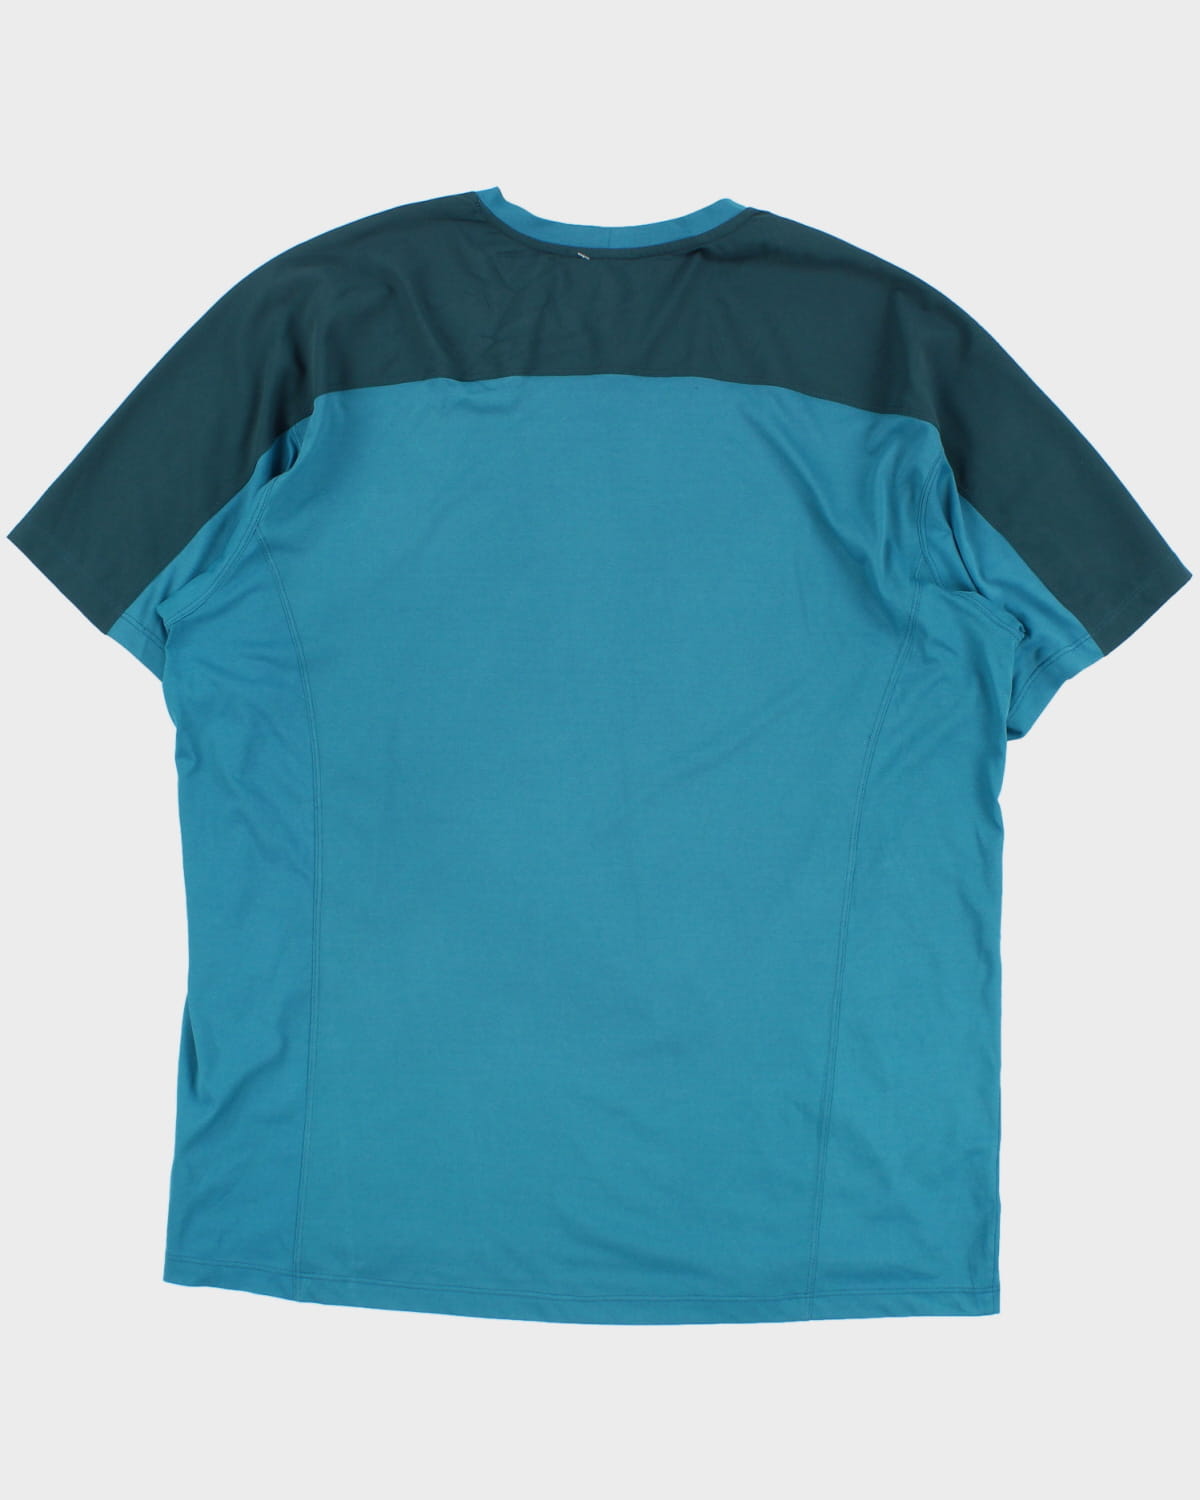 Arc'teryx Blue Sports T-Shirt - XL